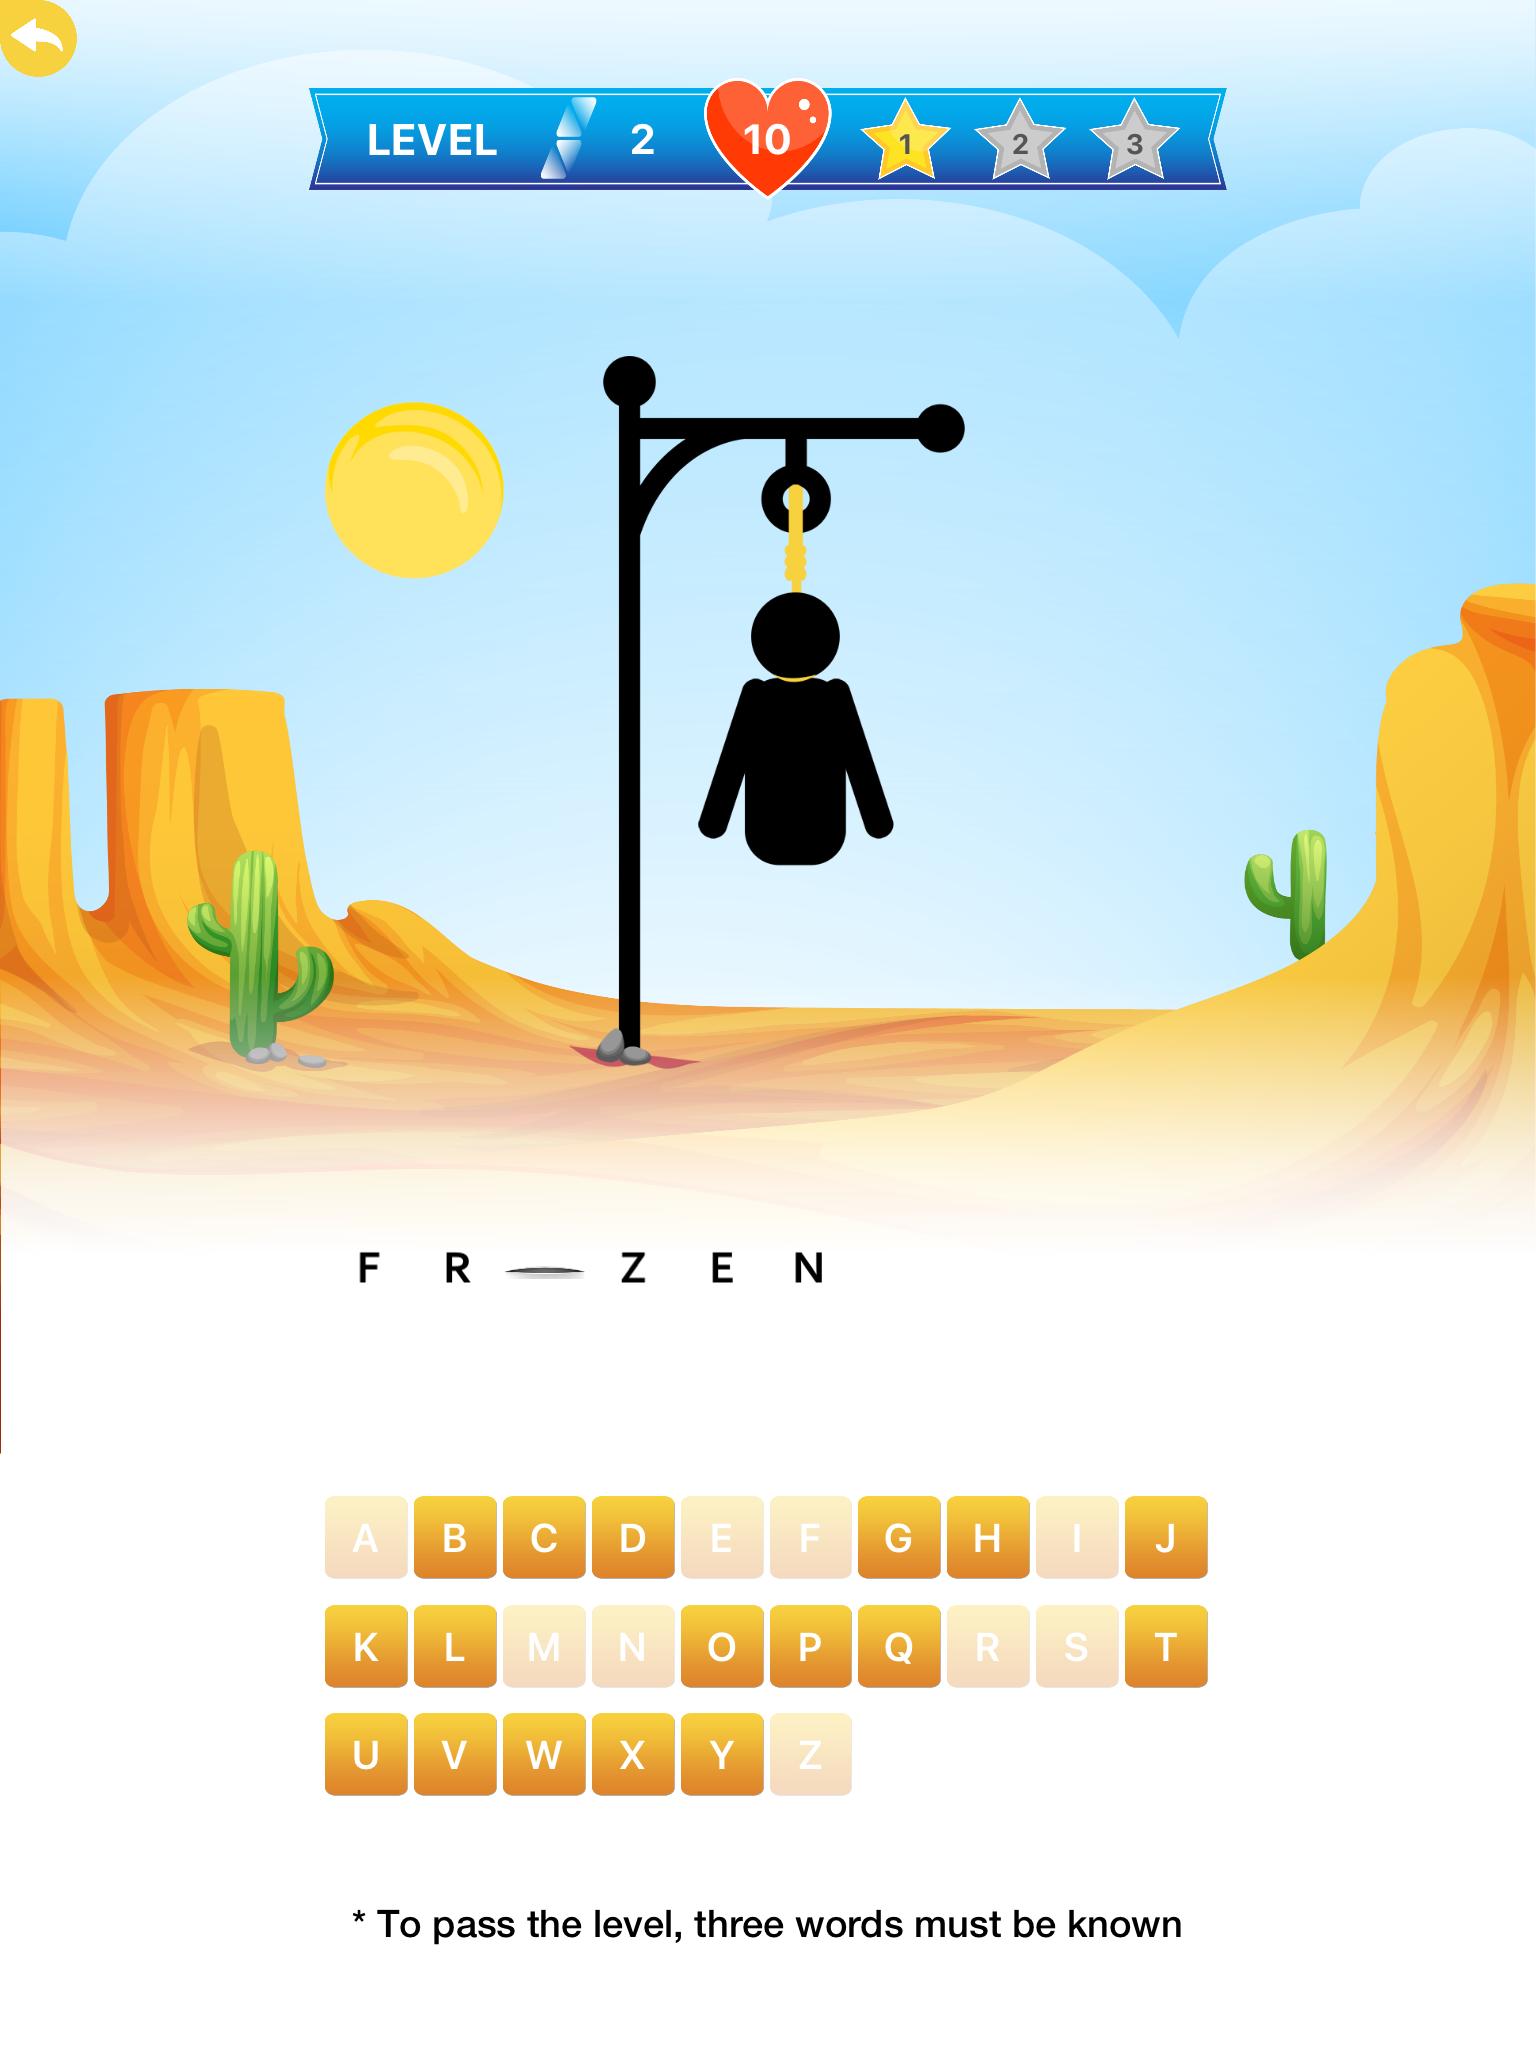 Hangman Multiplayer - Online Word Game 7.9.0 Screenshot 14